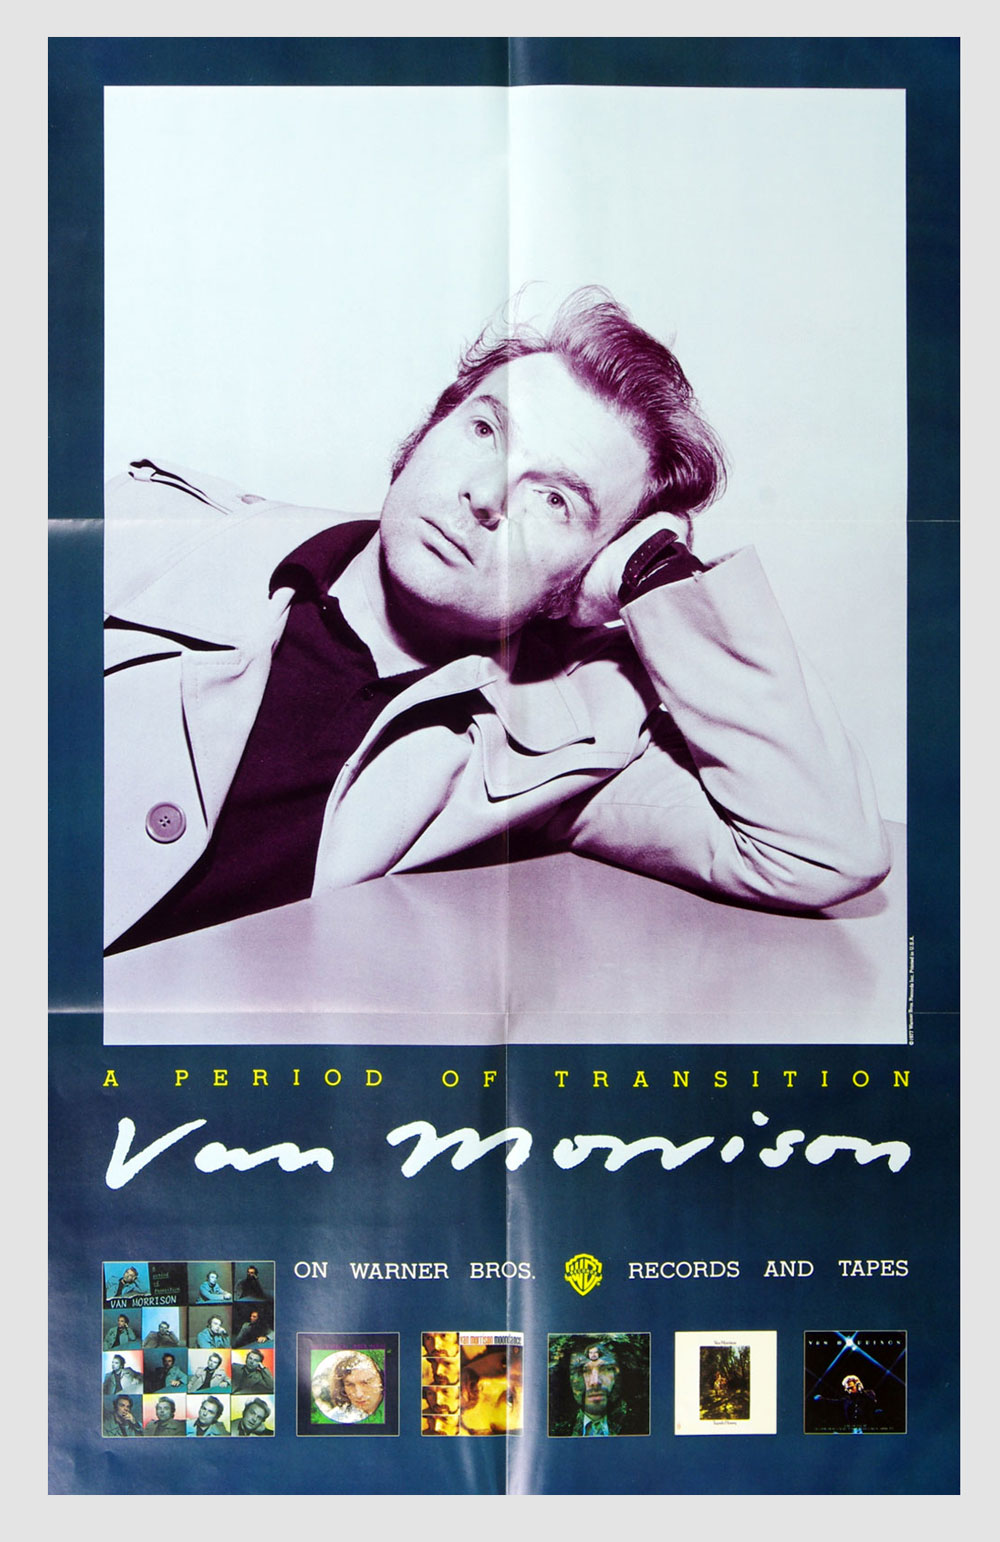 Van Morrison Poster 1977 A Period of Transition Album Promotion